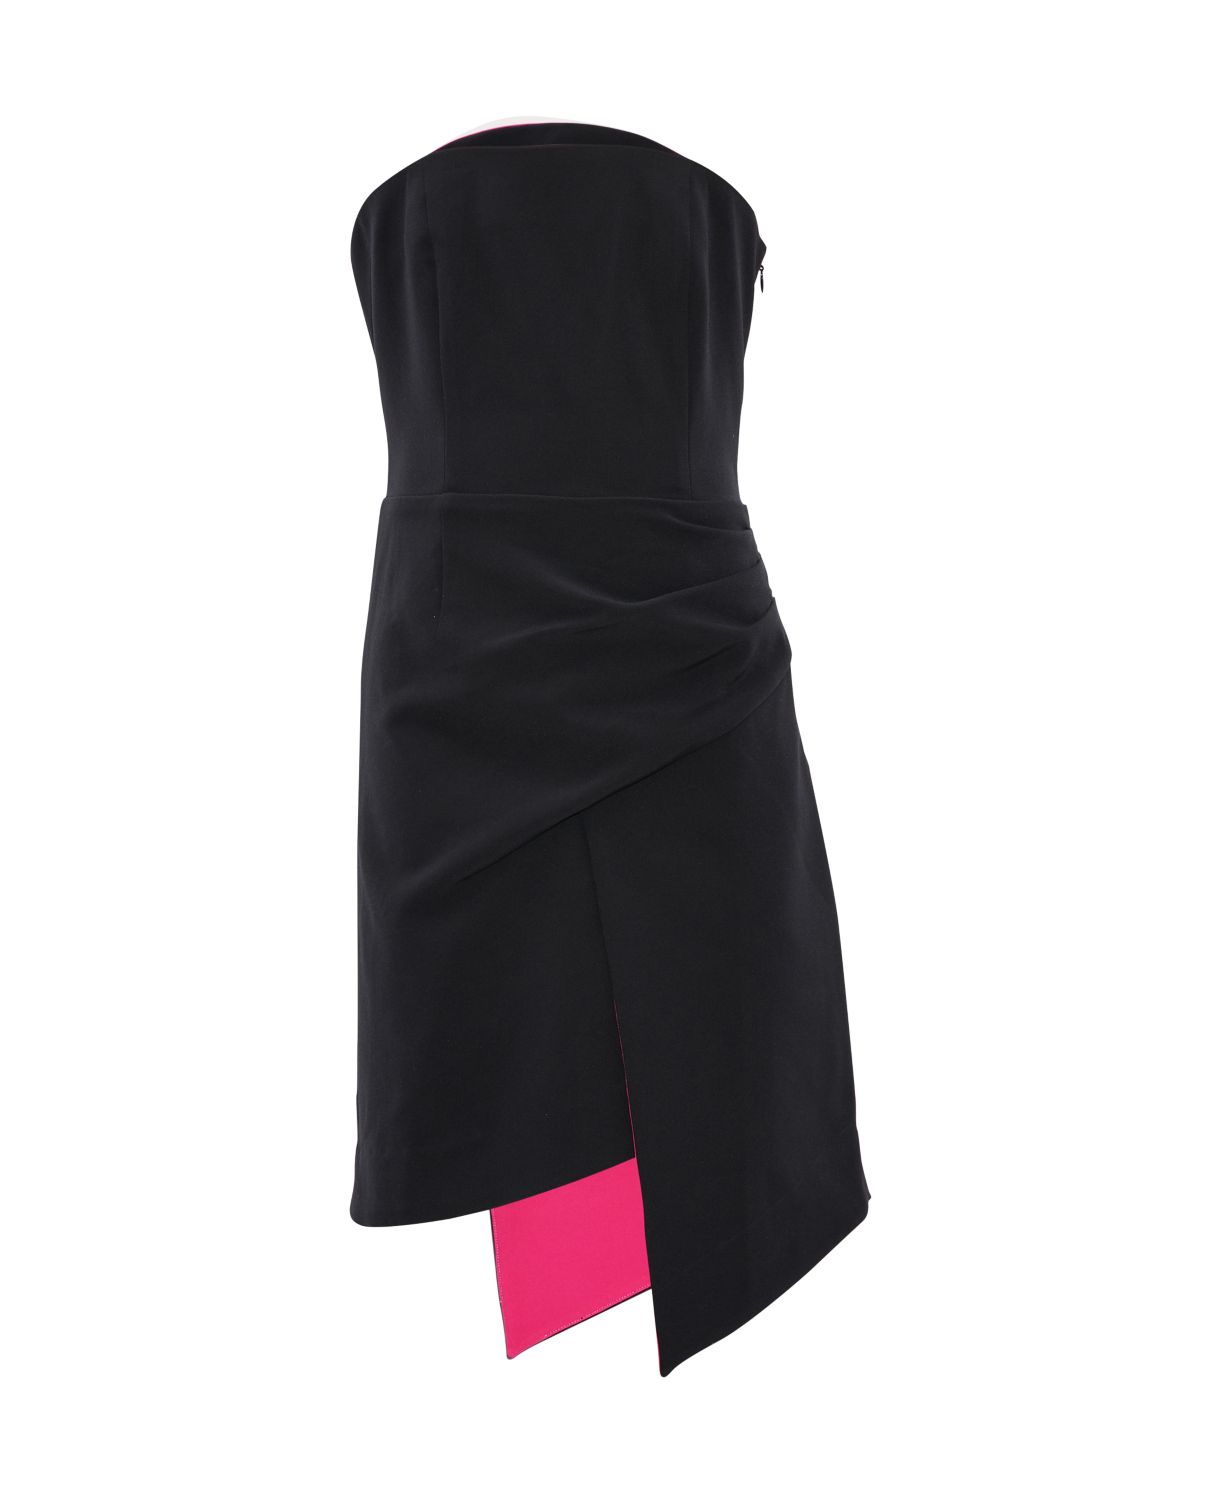 Асимметричное платье-футляр без бретелек Glenda для девочек Milly Minis